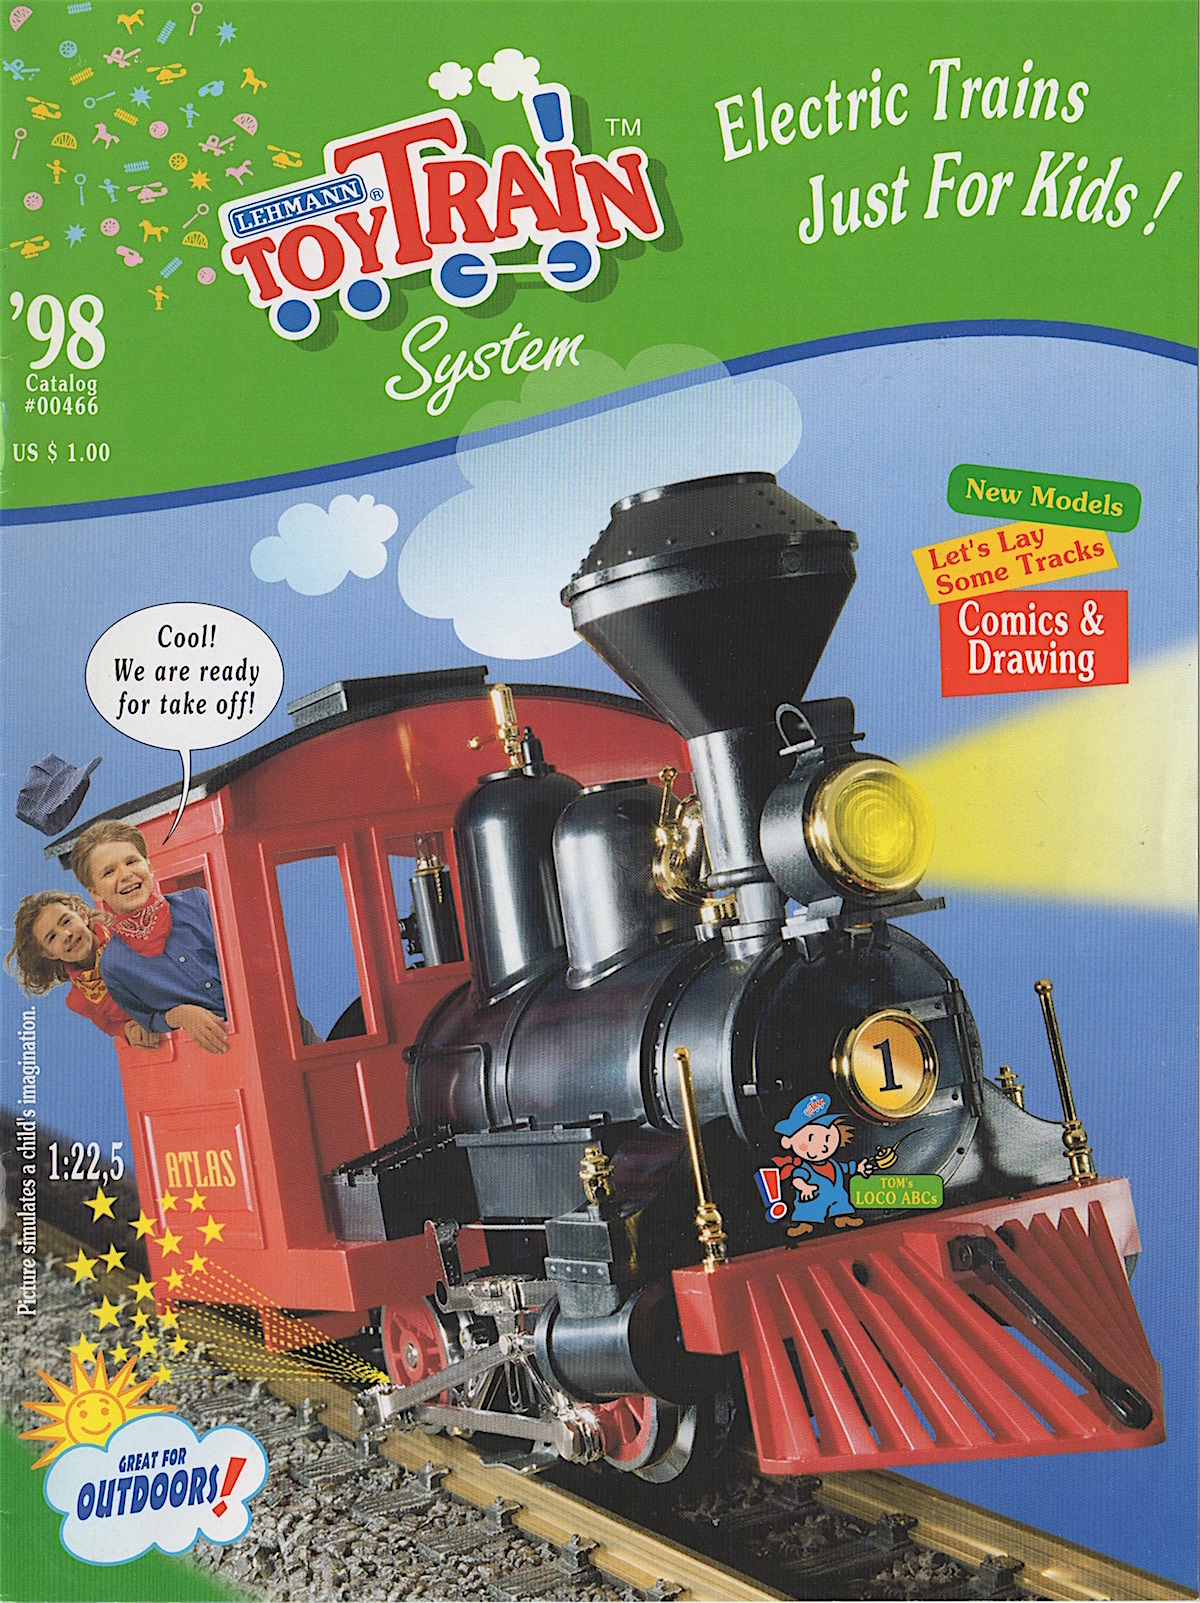 Lehmann Toy Train Katalog (Catalogue) 1998 - English, US